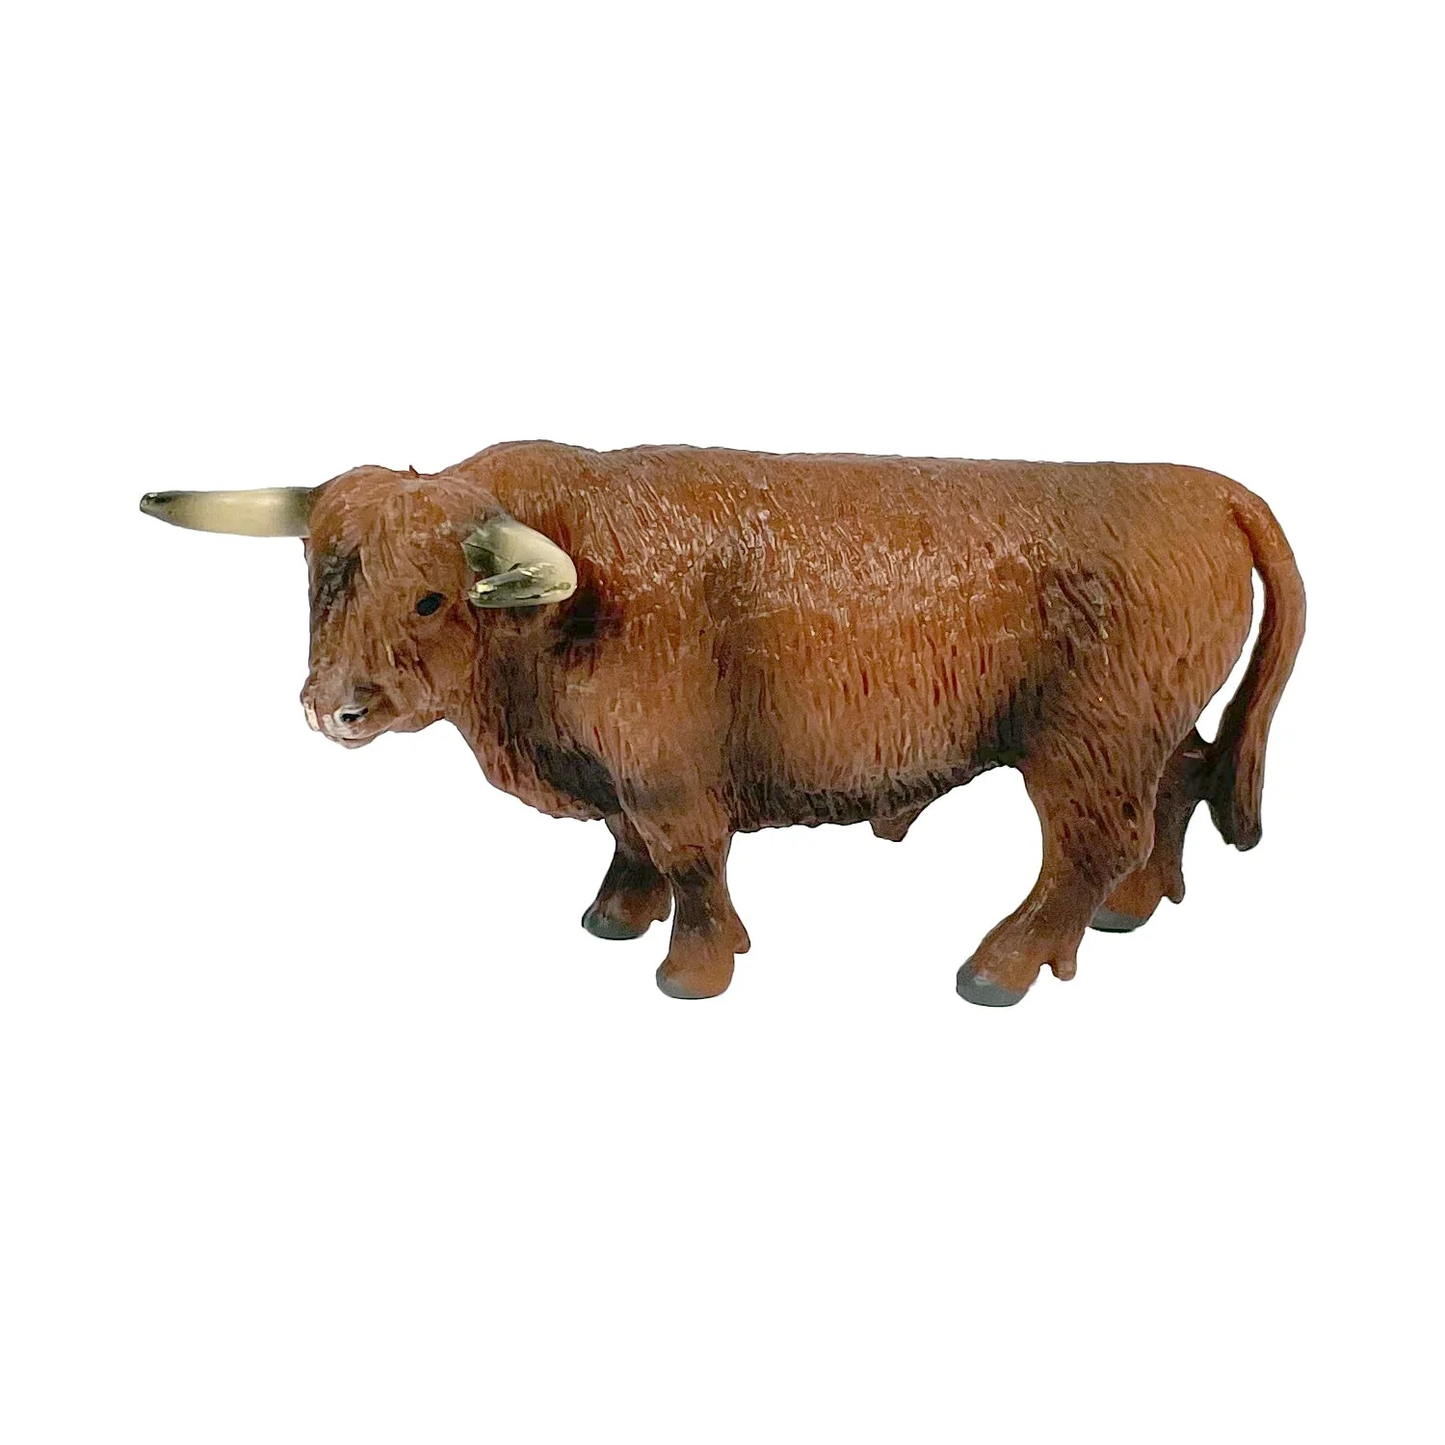 The Big Country Highlander Bull